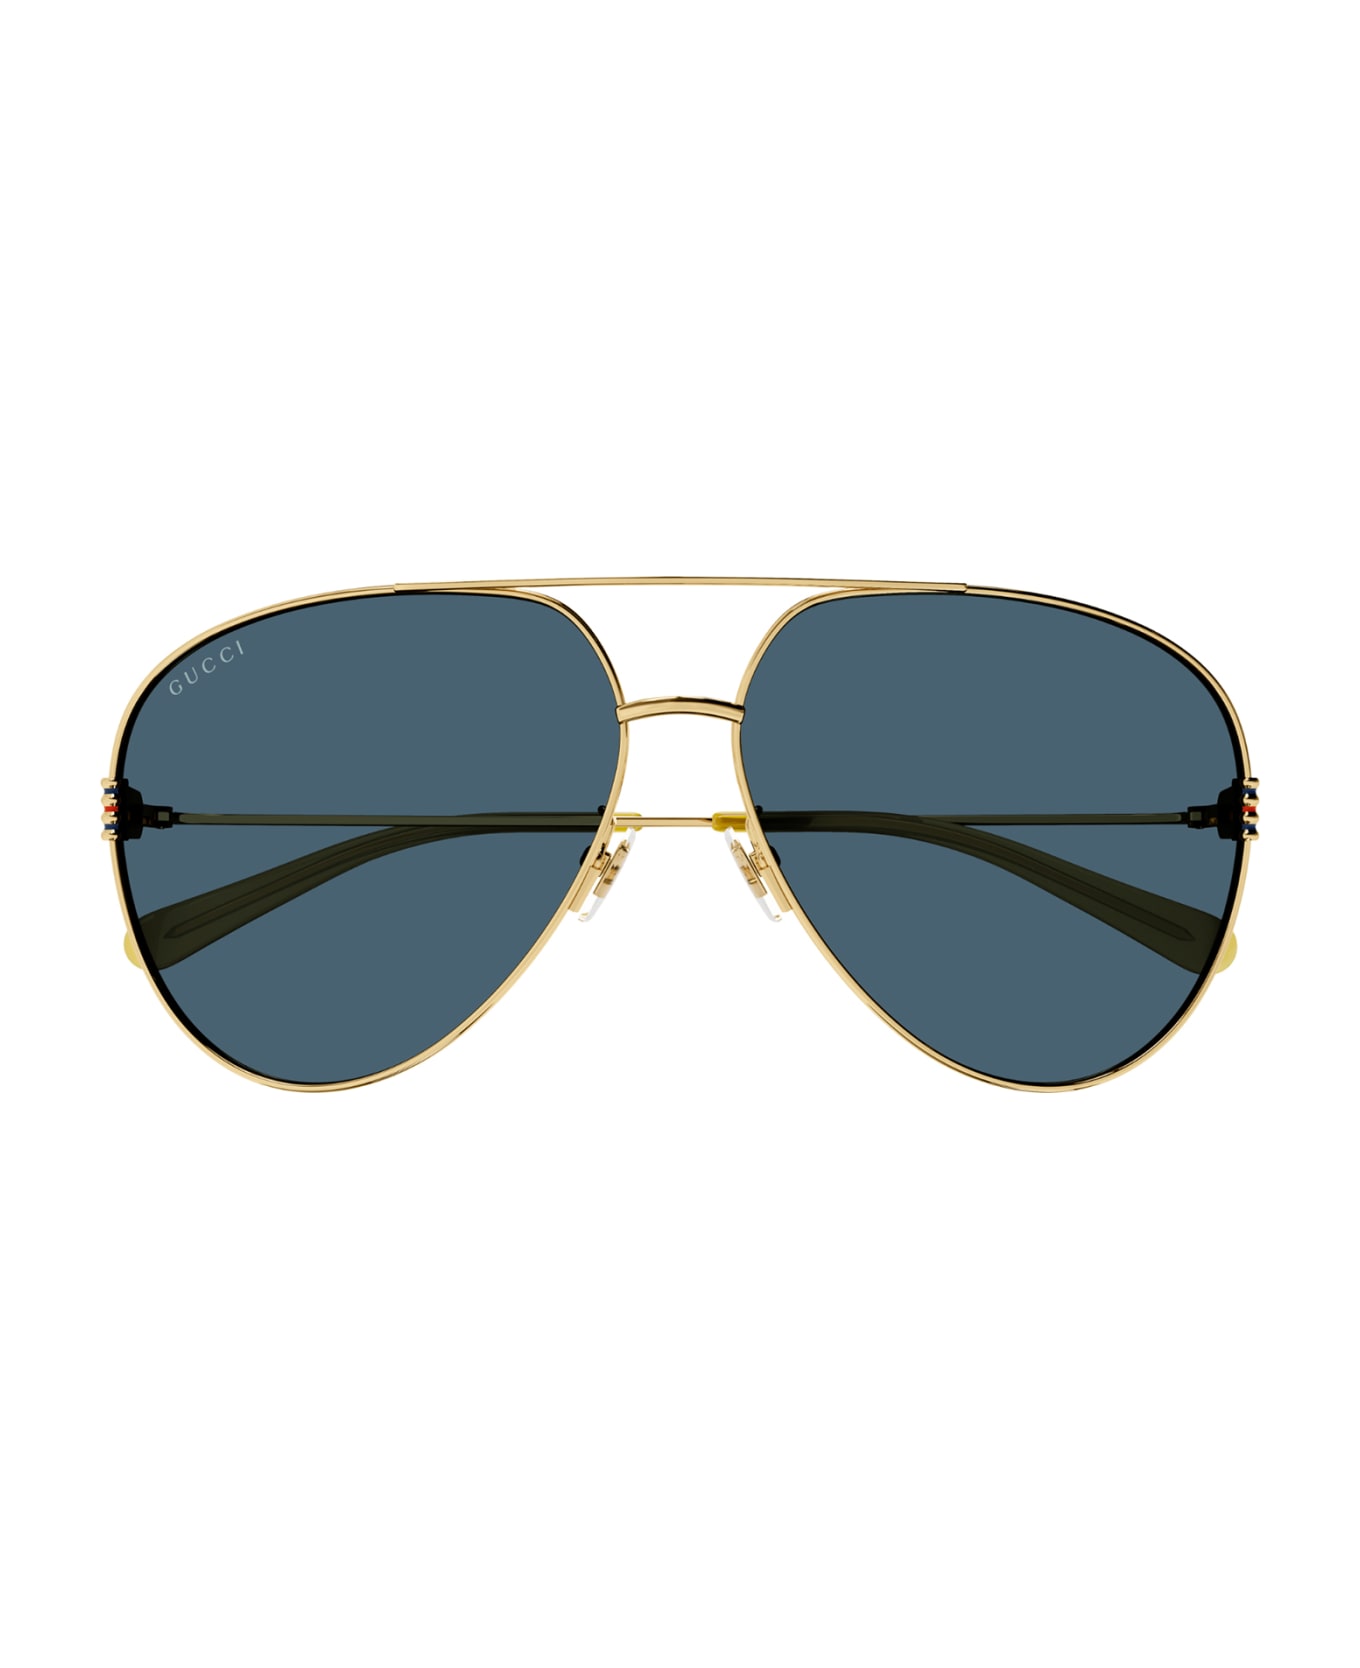 Gucci Eyewear Gg1280s Sunglasses - 003 gold gold blue サングラス